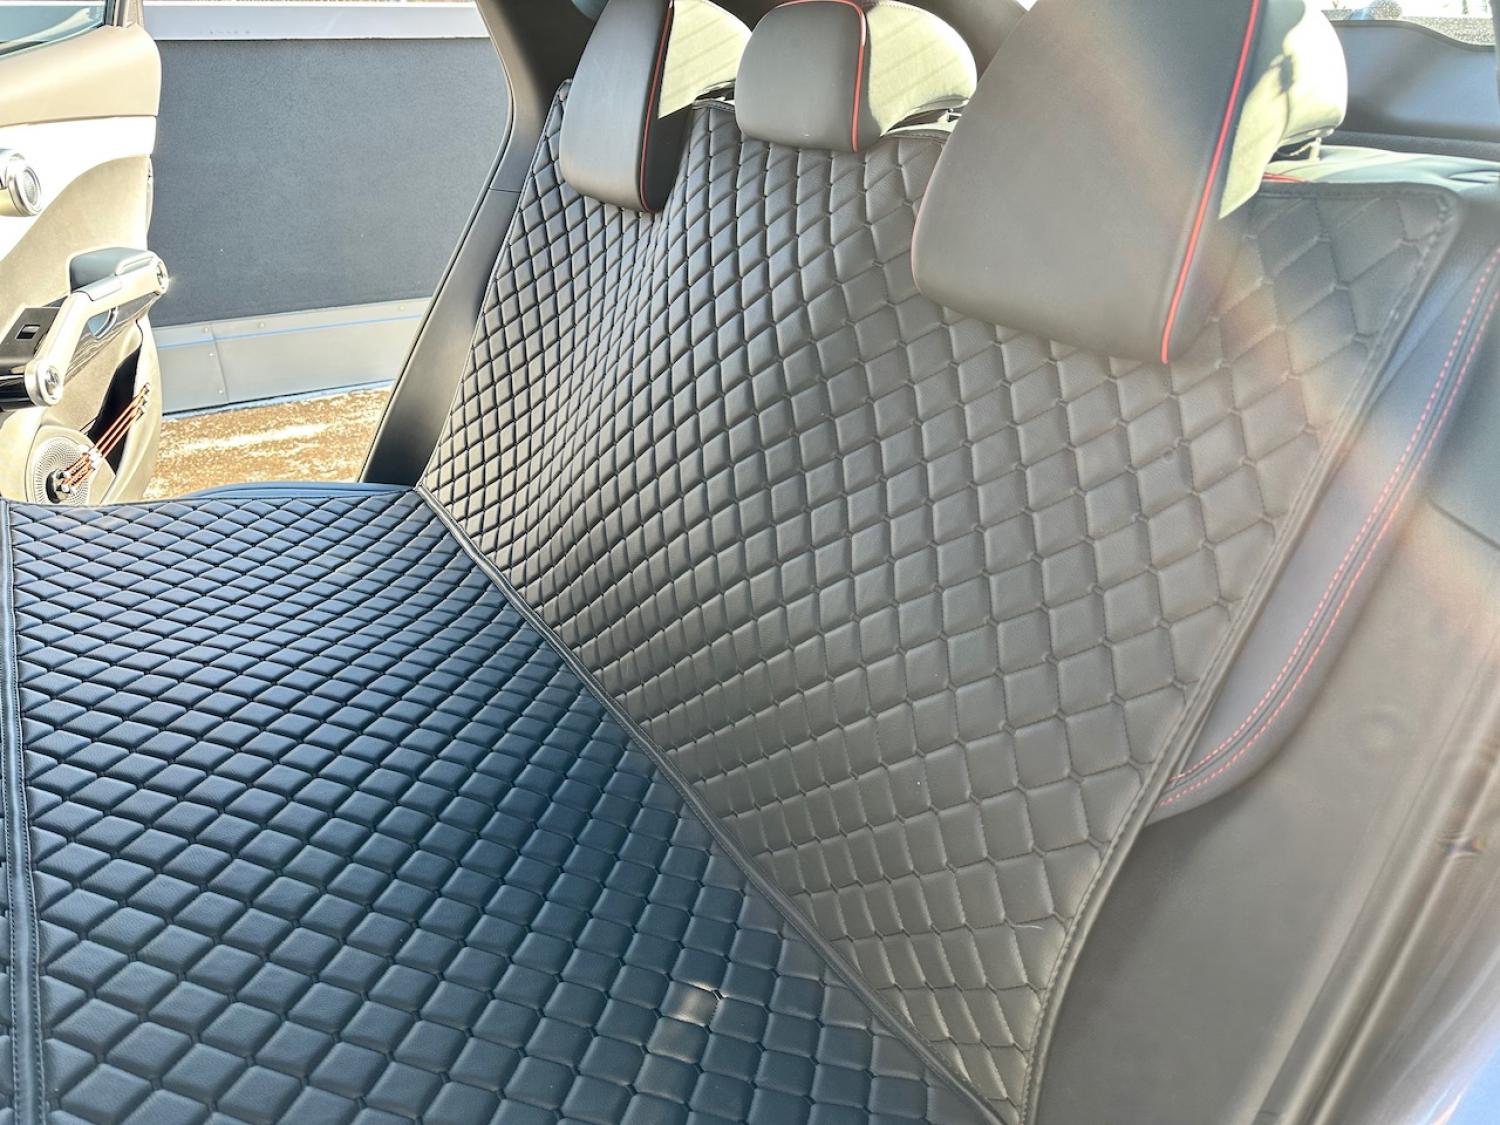 CARSTYLER® Back Seat Cover Geeignet Für Hyundai Tuscon Plug in Hybrid, 2021 ' heute